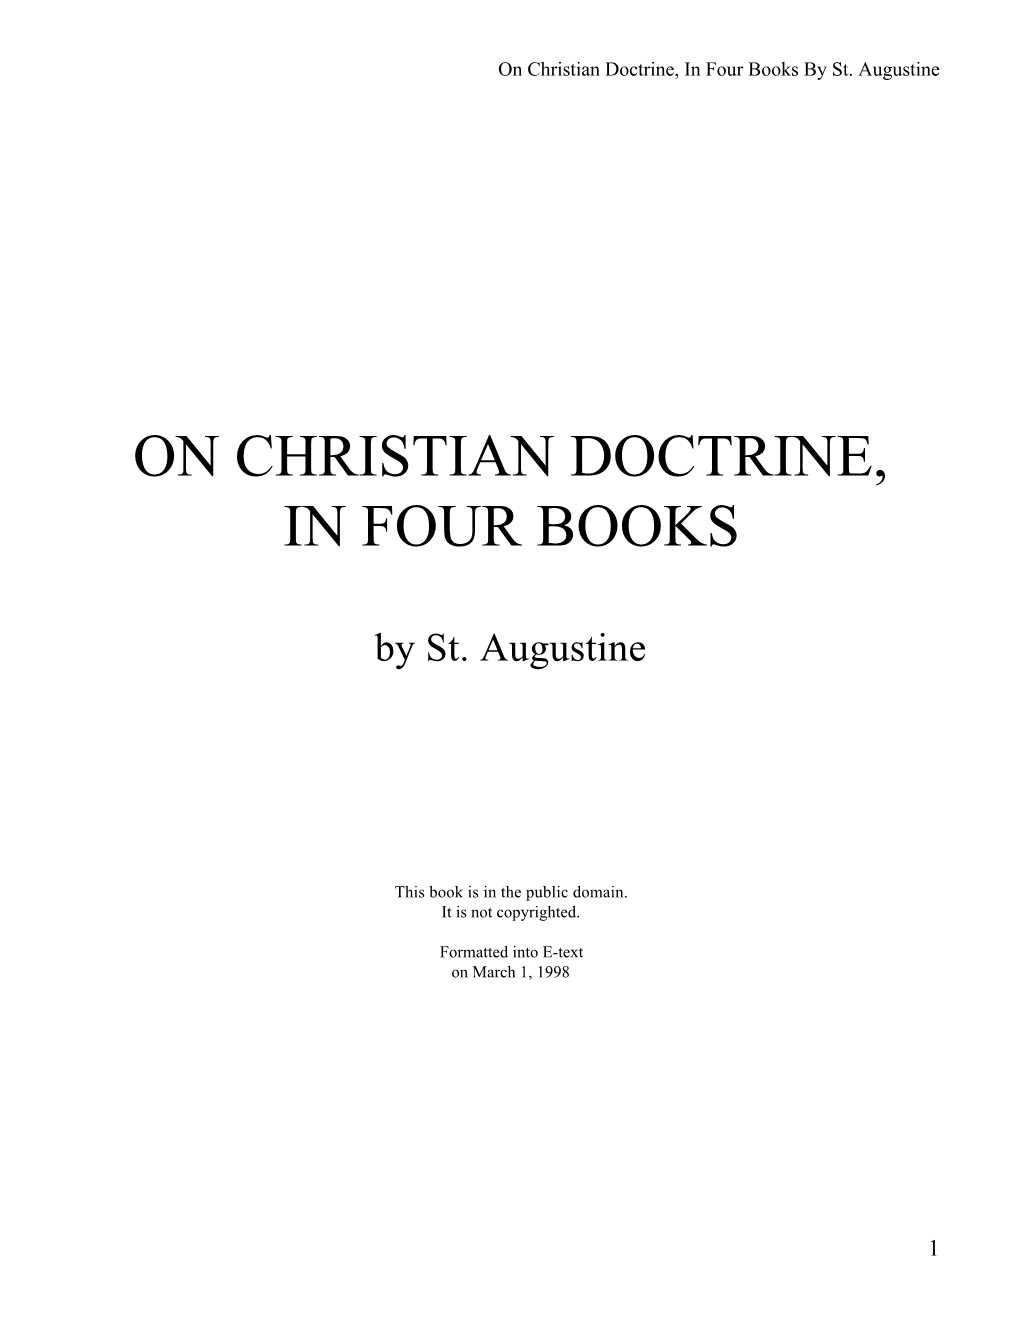 On Christian Doctrine- St. Augustine